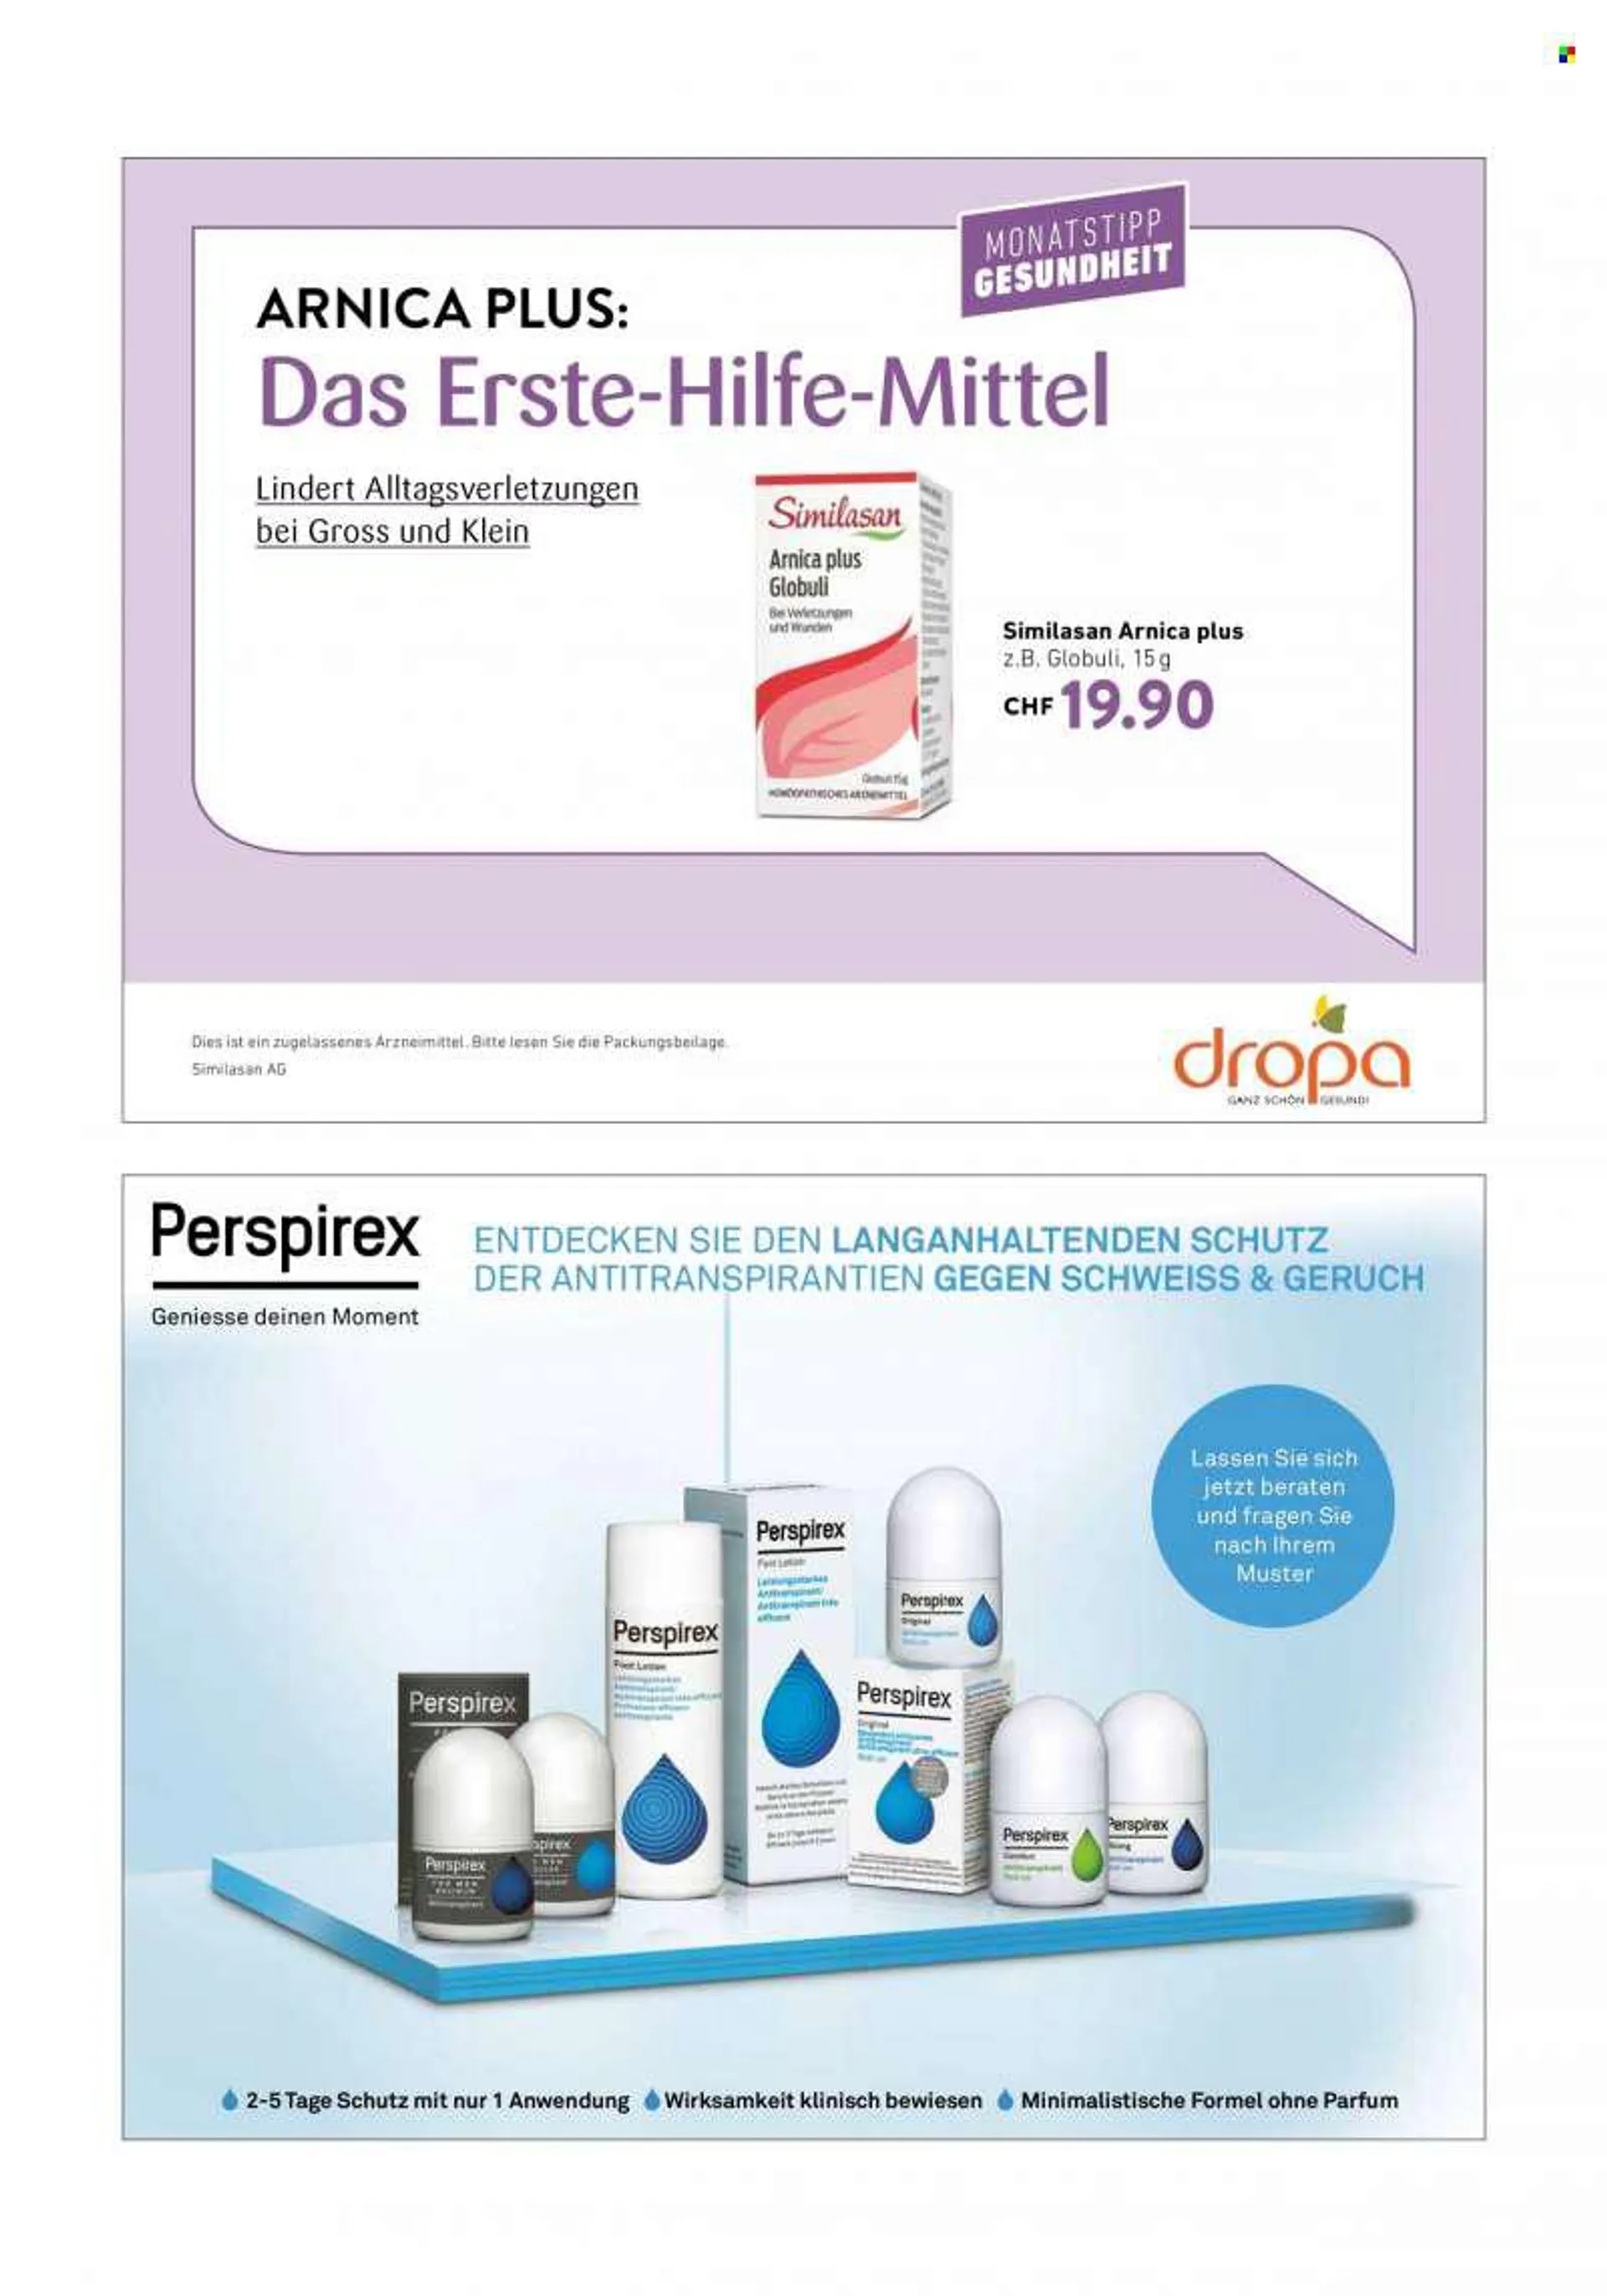 Prospekte Dropa - Produkte in Aktion - Lotion, Antitranspirant, Arnica. Seite 2.